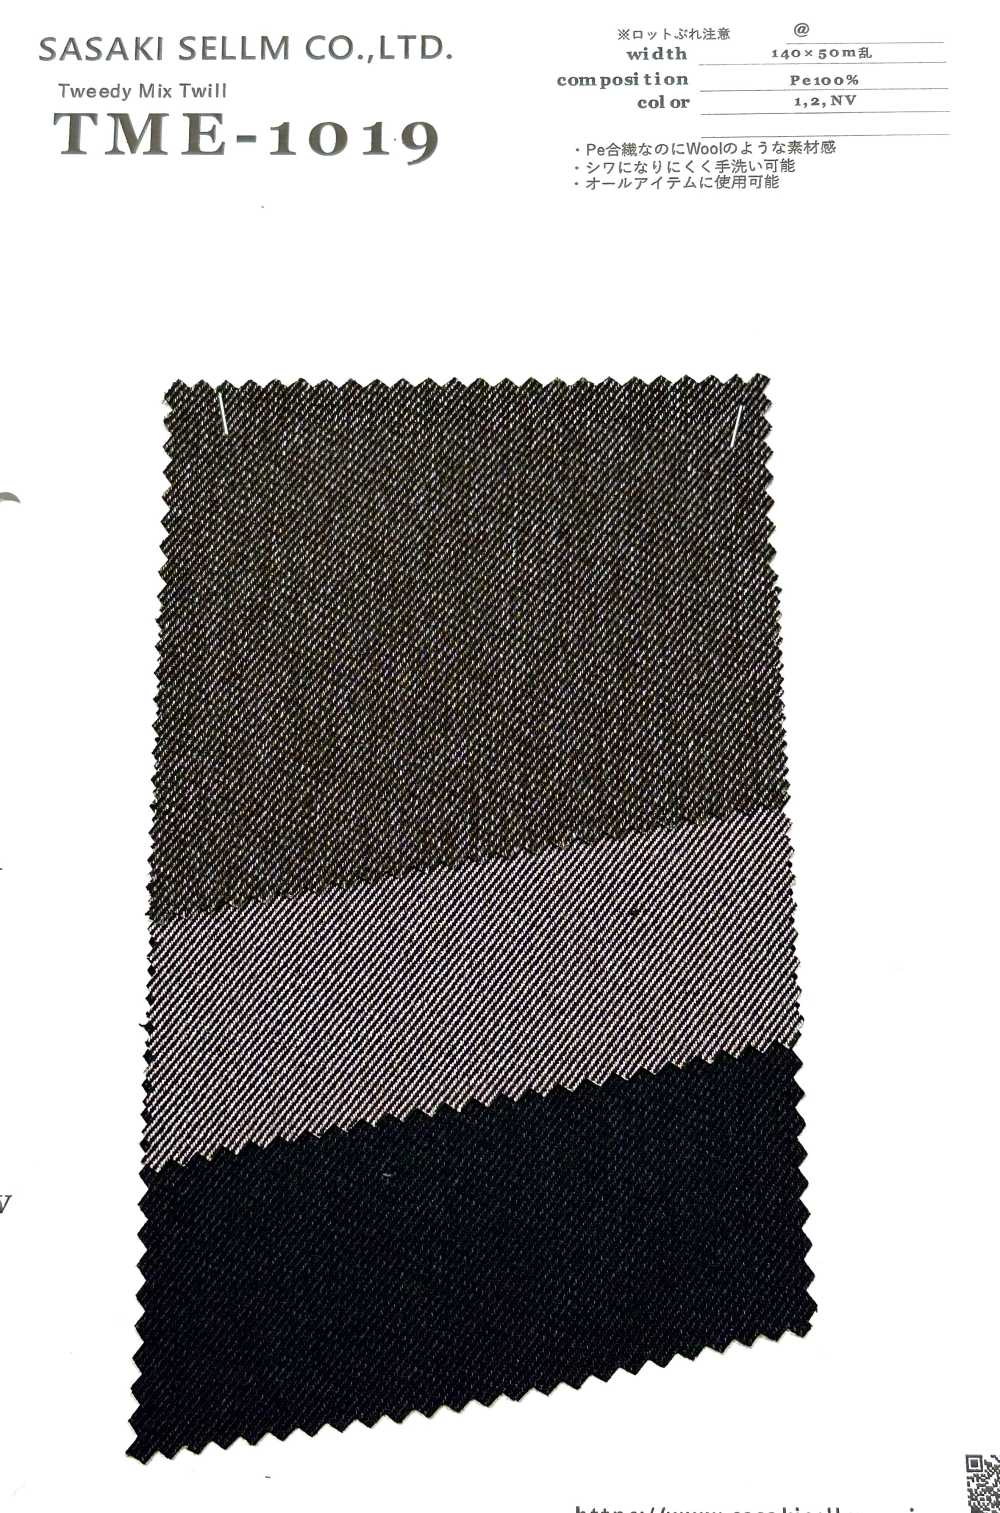 TME-1019 Sarga Mezcla De Tweedy[Fabrica Textil] SASAKISELLM